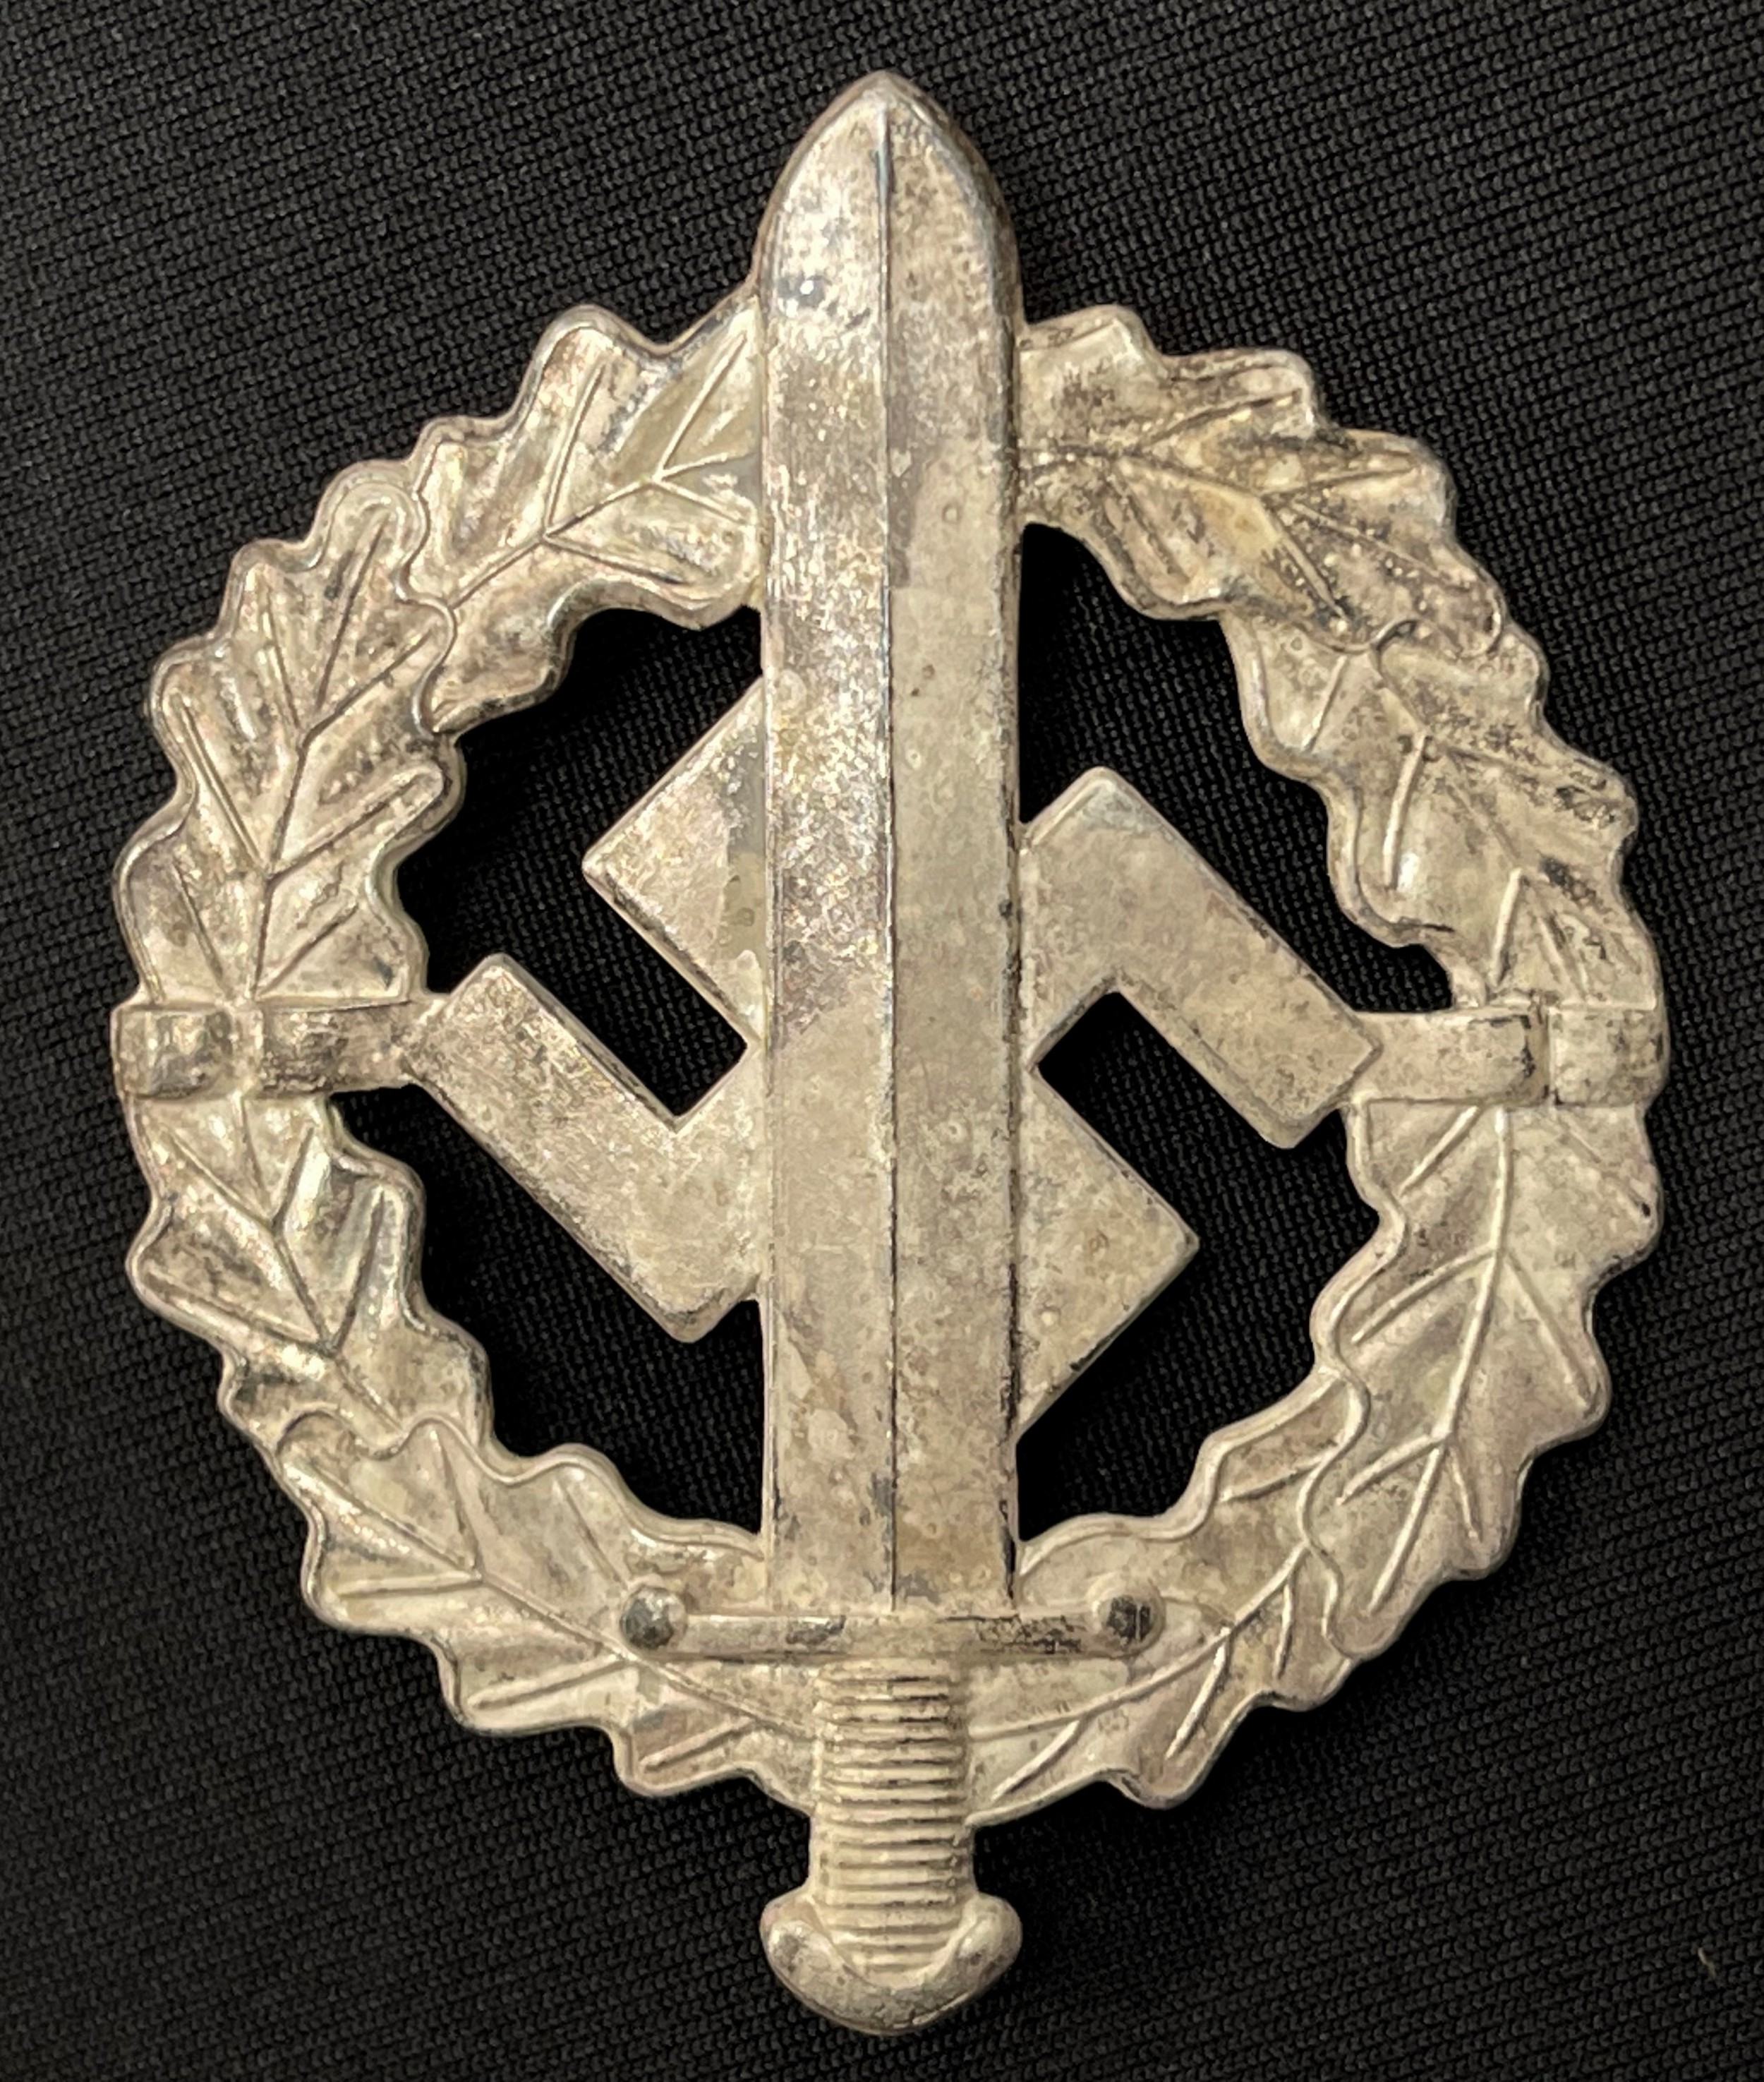 WW2 Third Reich Silberes SA-Sportabzeichen - SA Sports Badge in Silver. Maker marked "W. Redo".